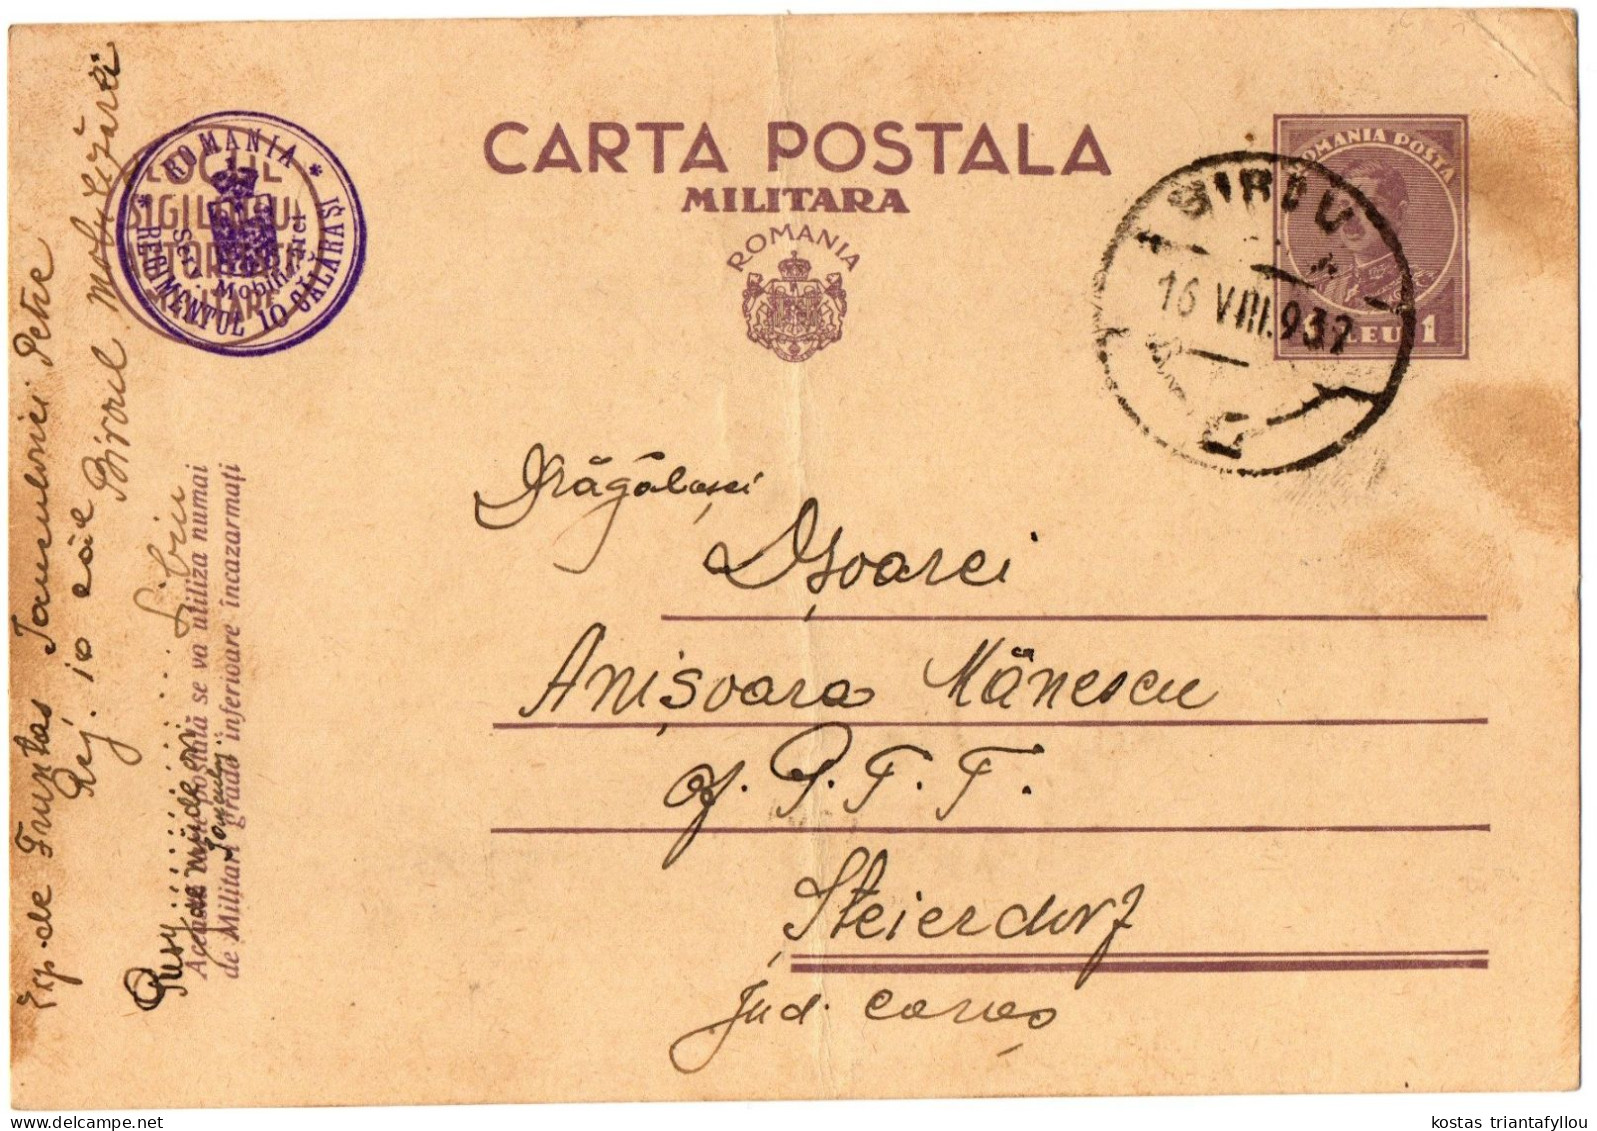 1,89 ROMANIA, 1937, MILITARY POSTAL STATIONERY - Entiers Postaux